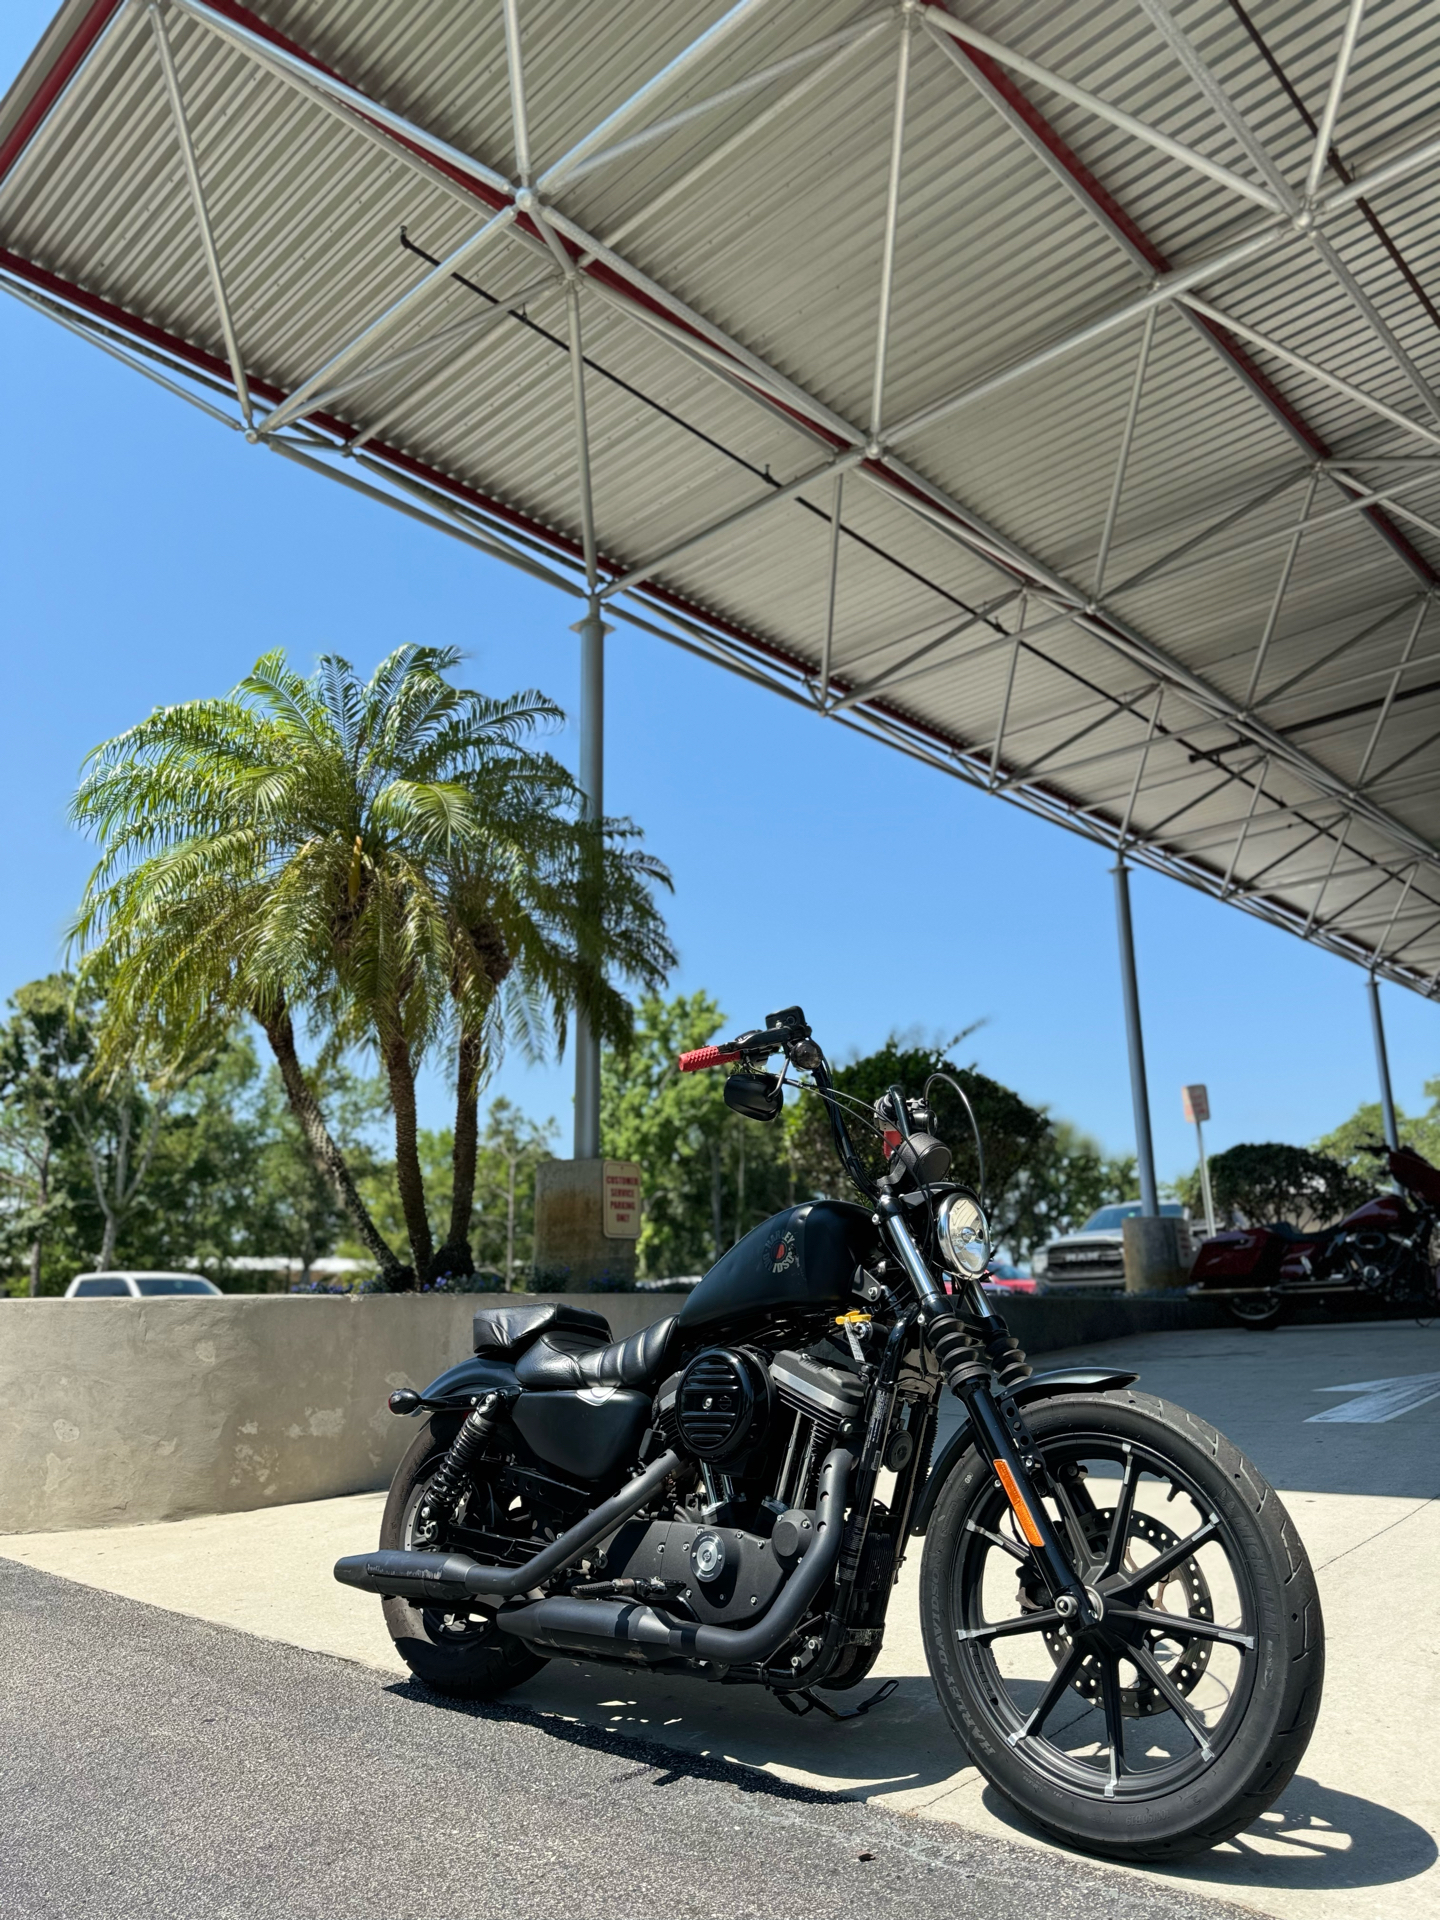 2020 Harley-Davidson Iron 883™ in Sanford, Florida - Photo 3